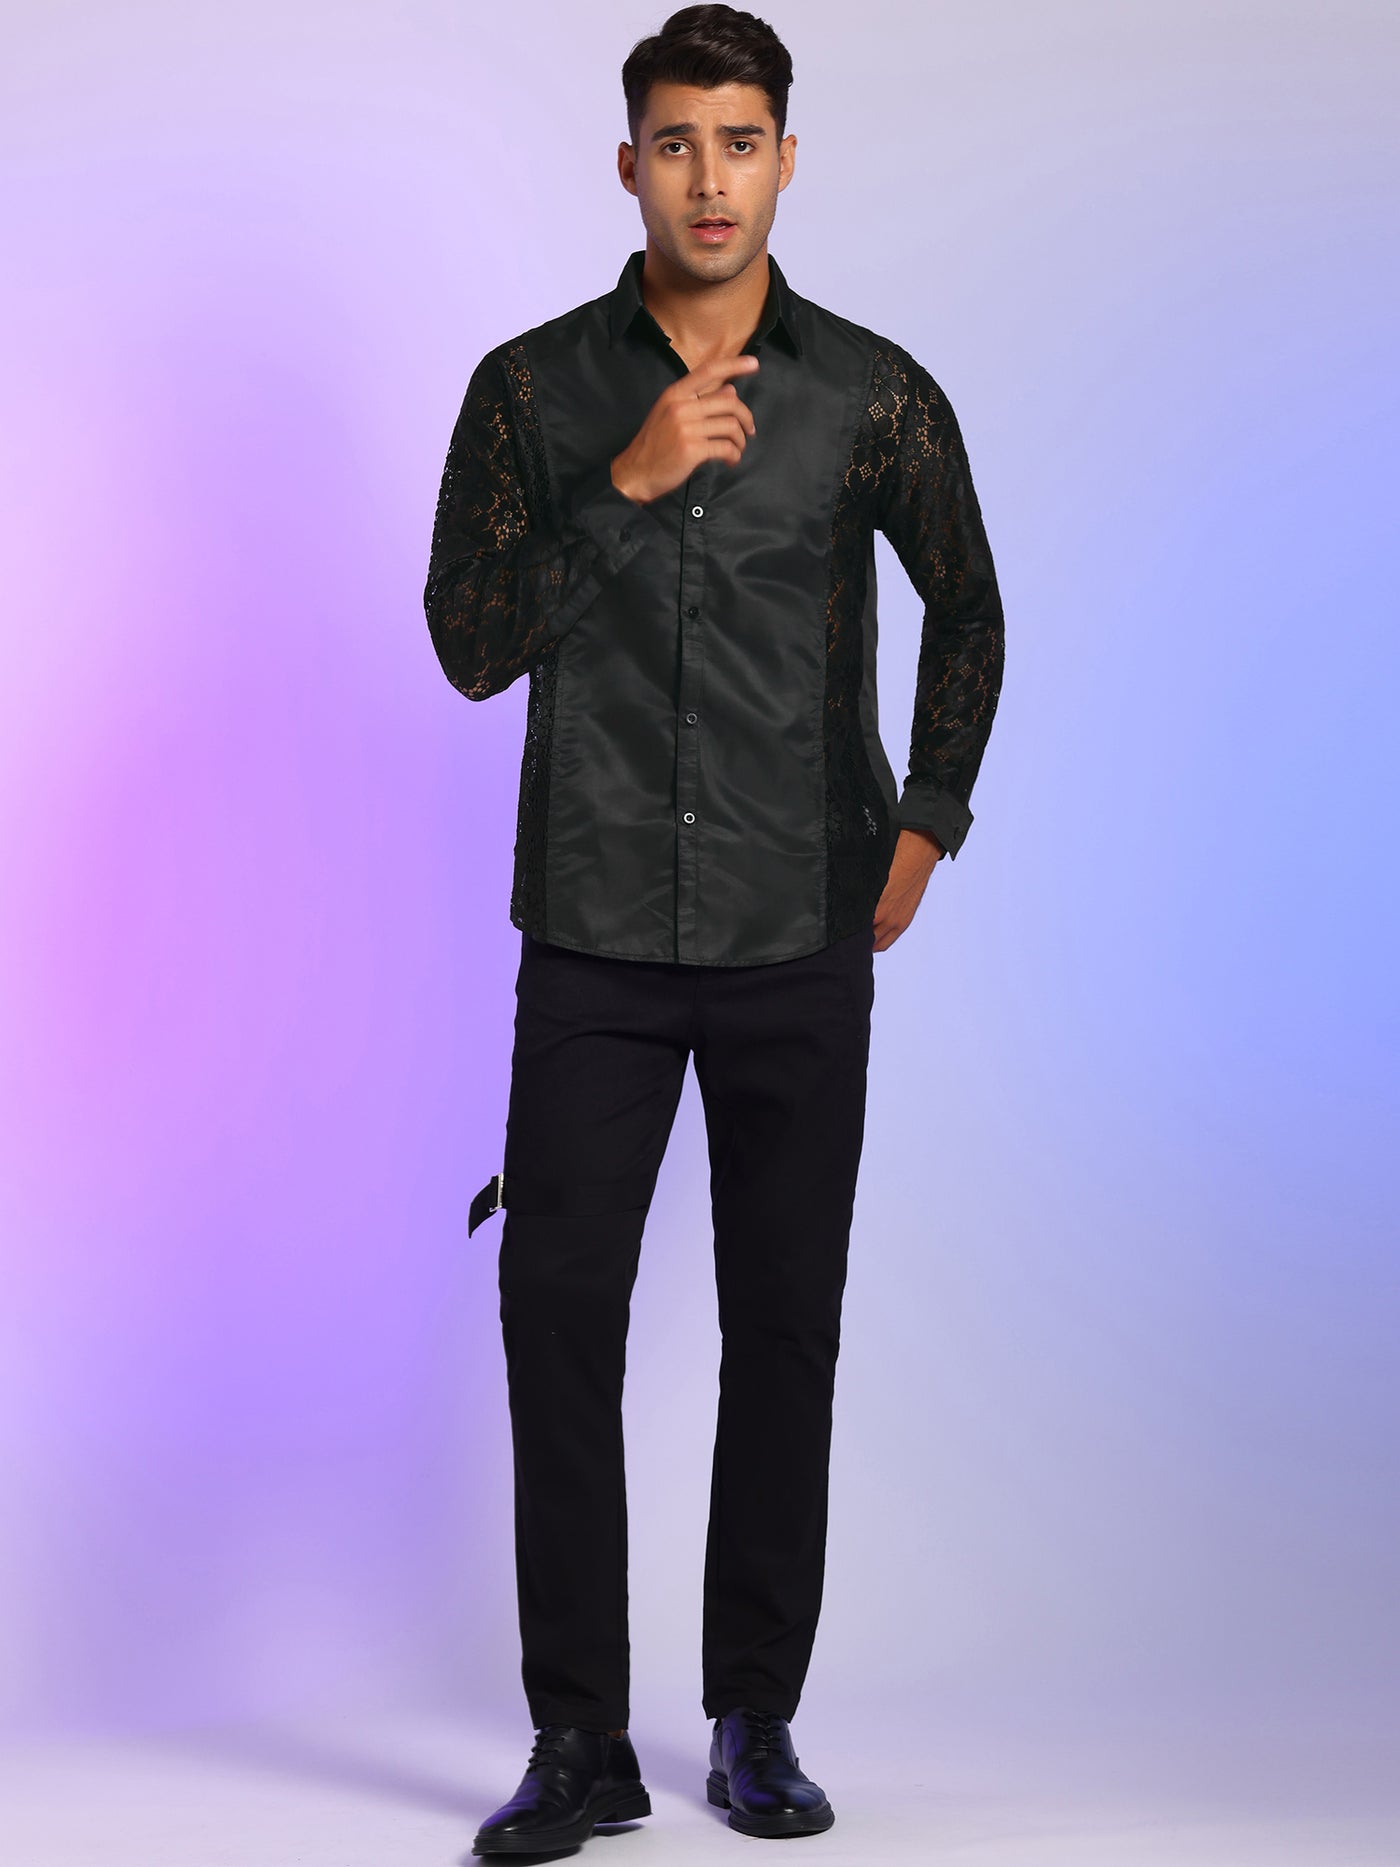 Bublédon Men's See Through Lace Sheer Sleeves Shirt Button Down Party Nightclub Shirts